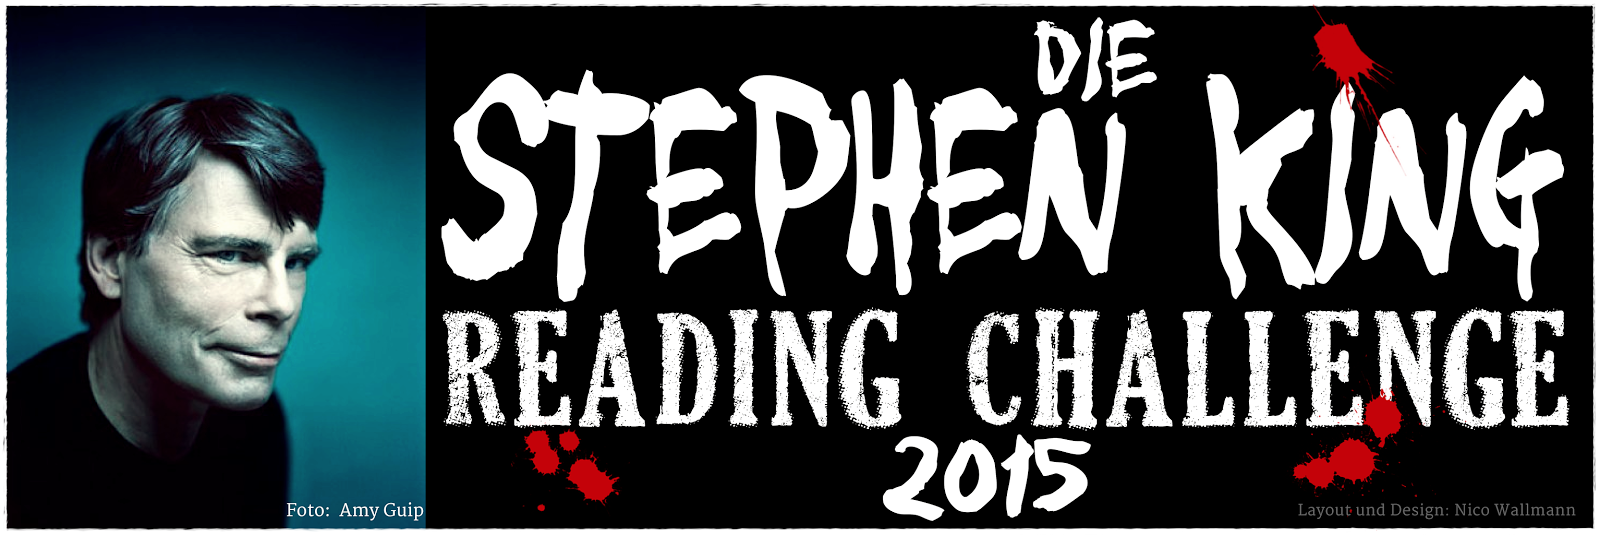 Stephen King reading challenge 2